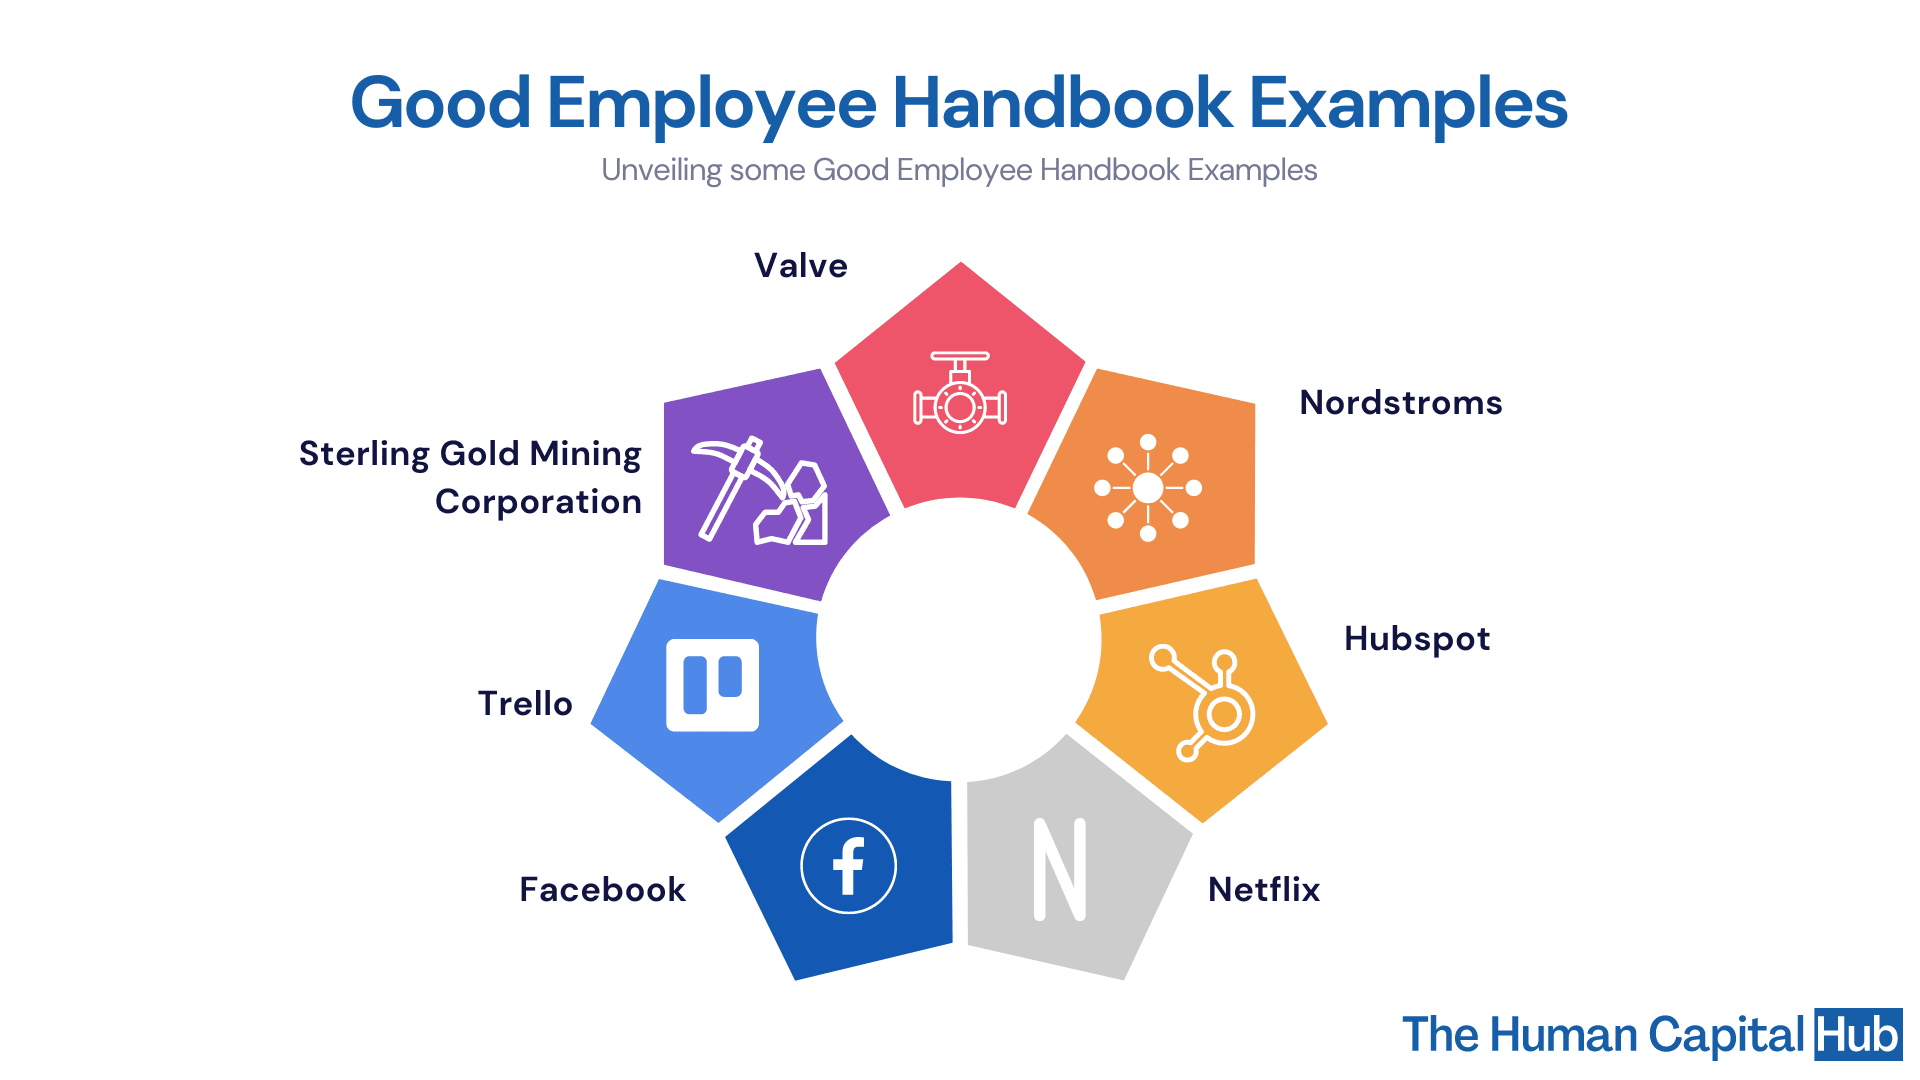 Employee Handbook template: Links to good examples